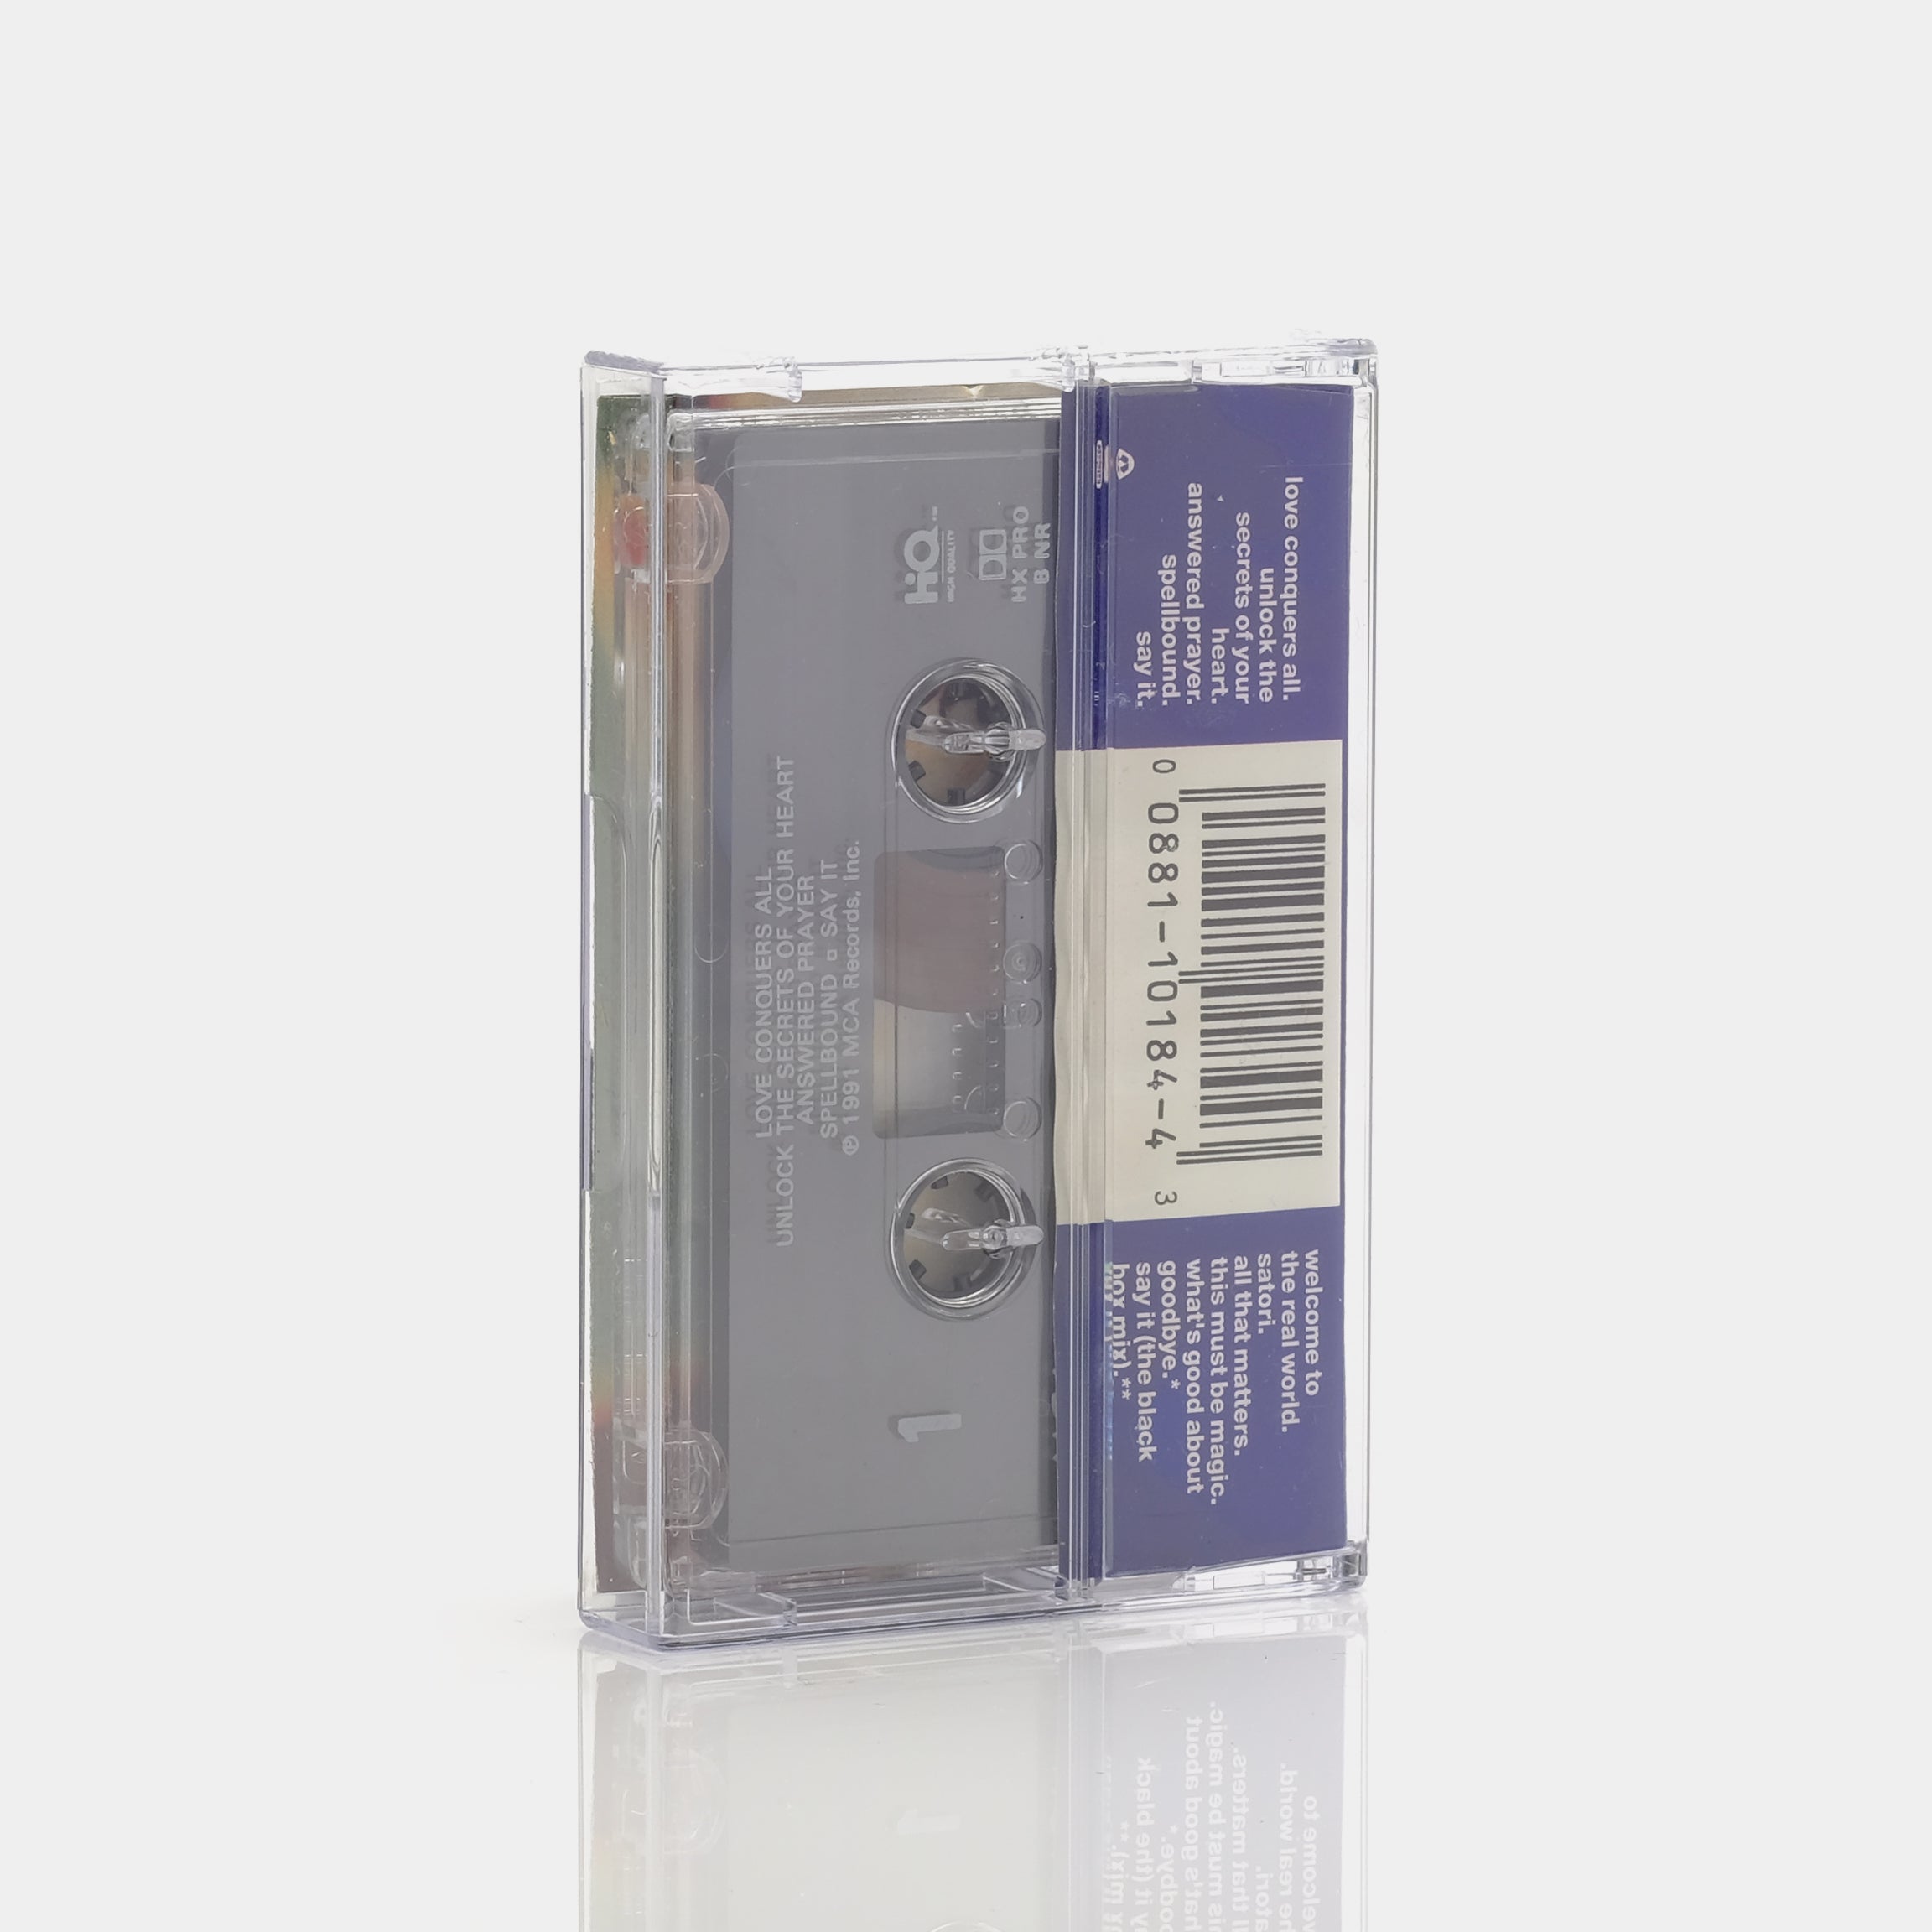 ABC - Abracadabra Cassette Tape